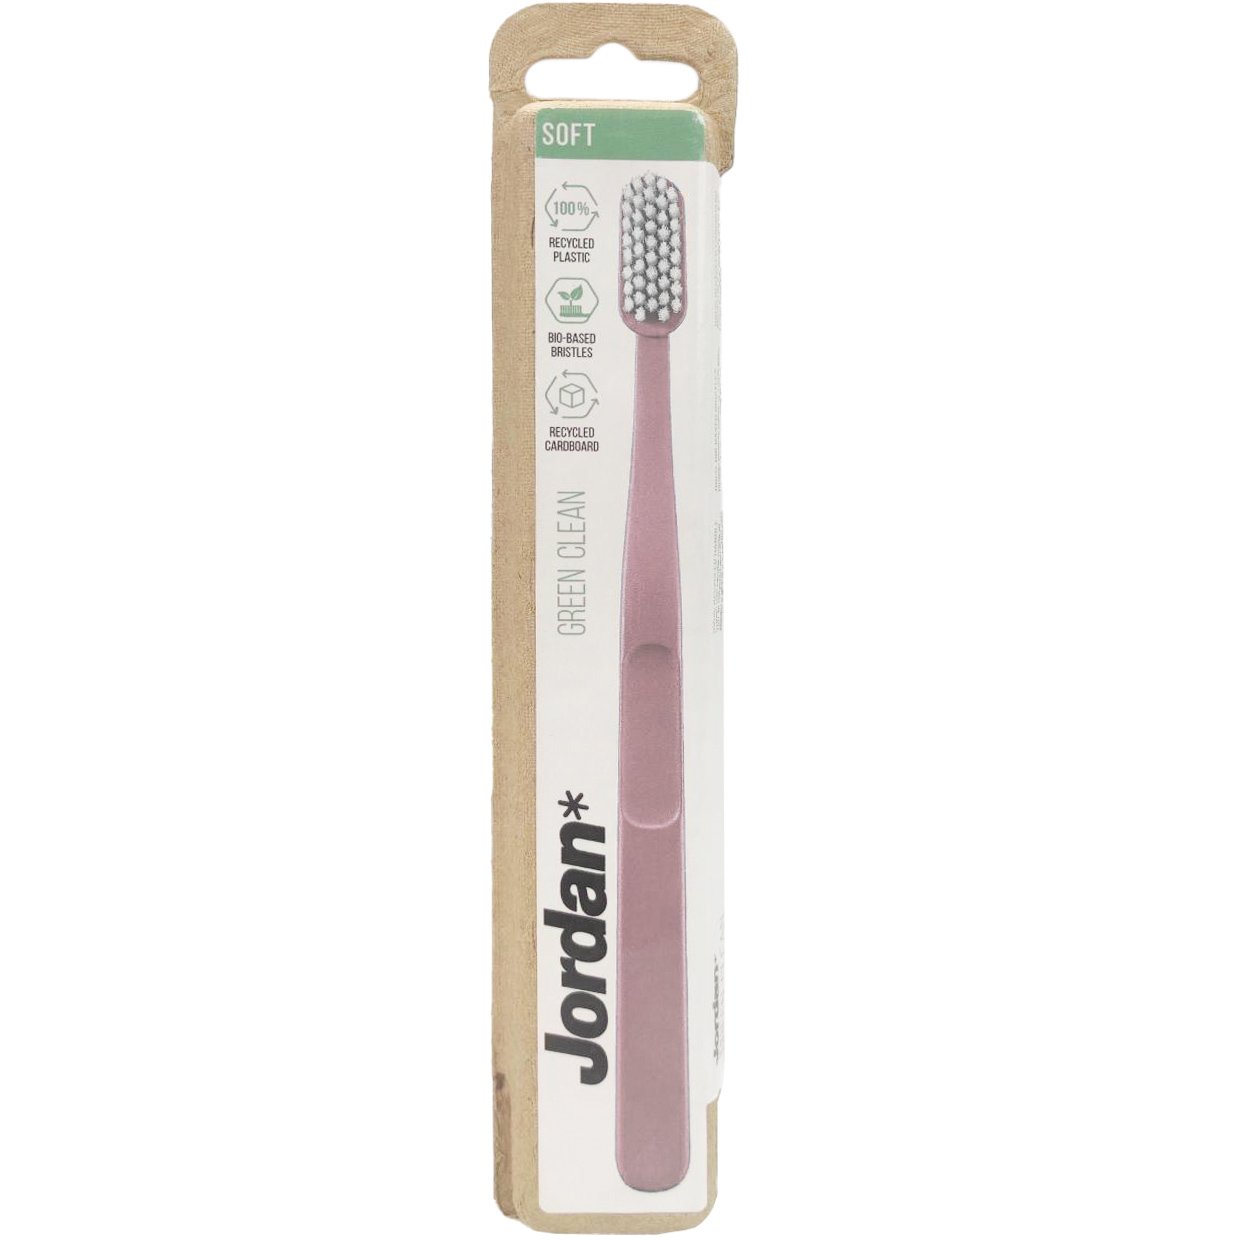 Jordan Green Clean Soft Toothbrush Bio Eco Χειροκίνητη Οδοντόβουρτσα Μαλακή, με Βιολογικής Προέλευσης Ίνες 1 Τεμάχιο – Ροζ